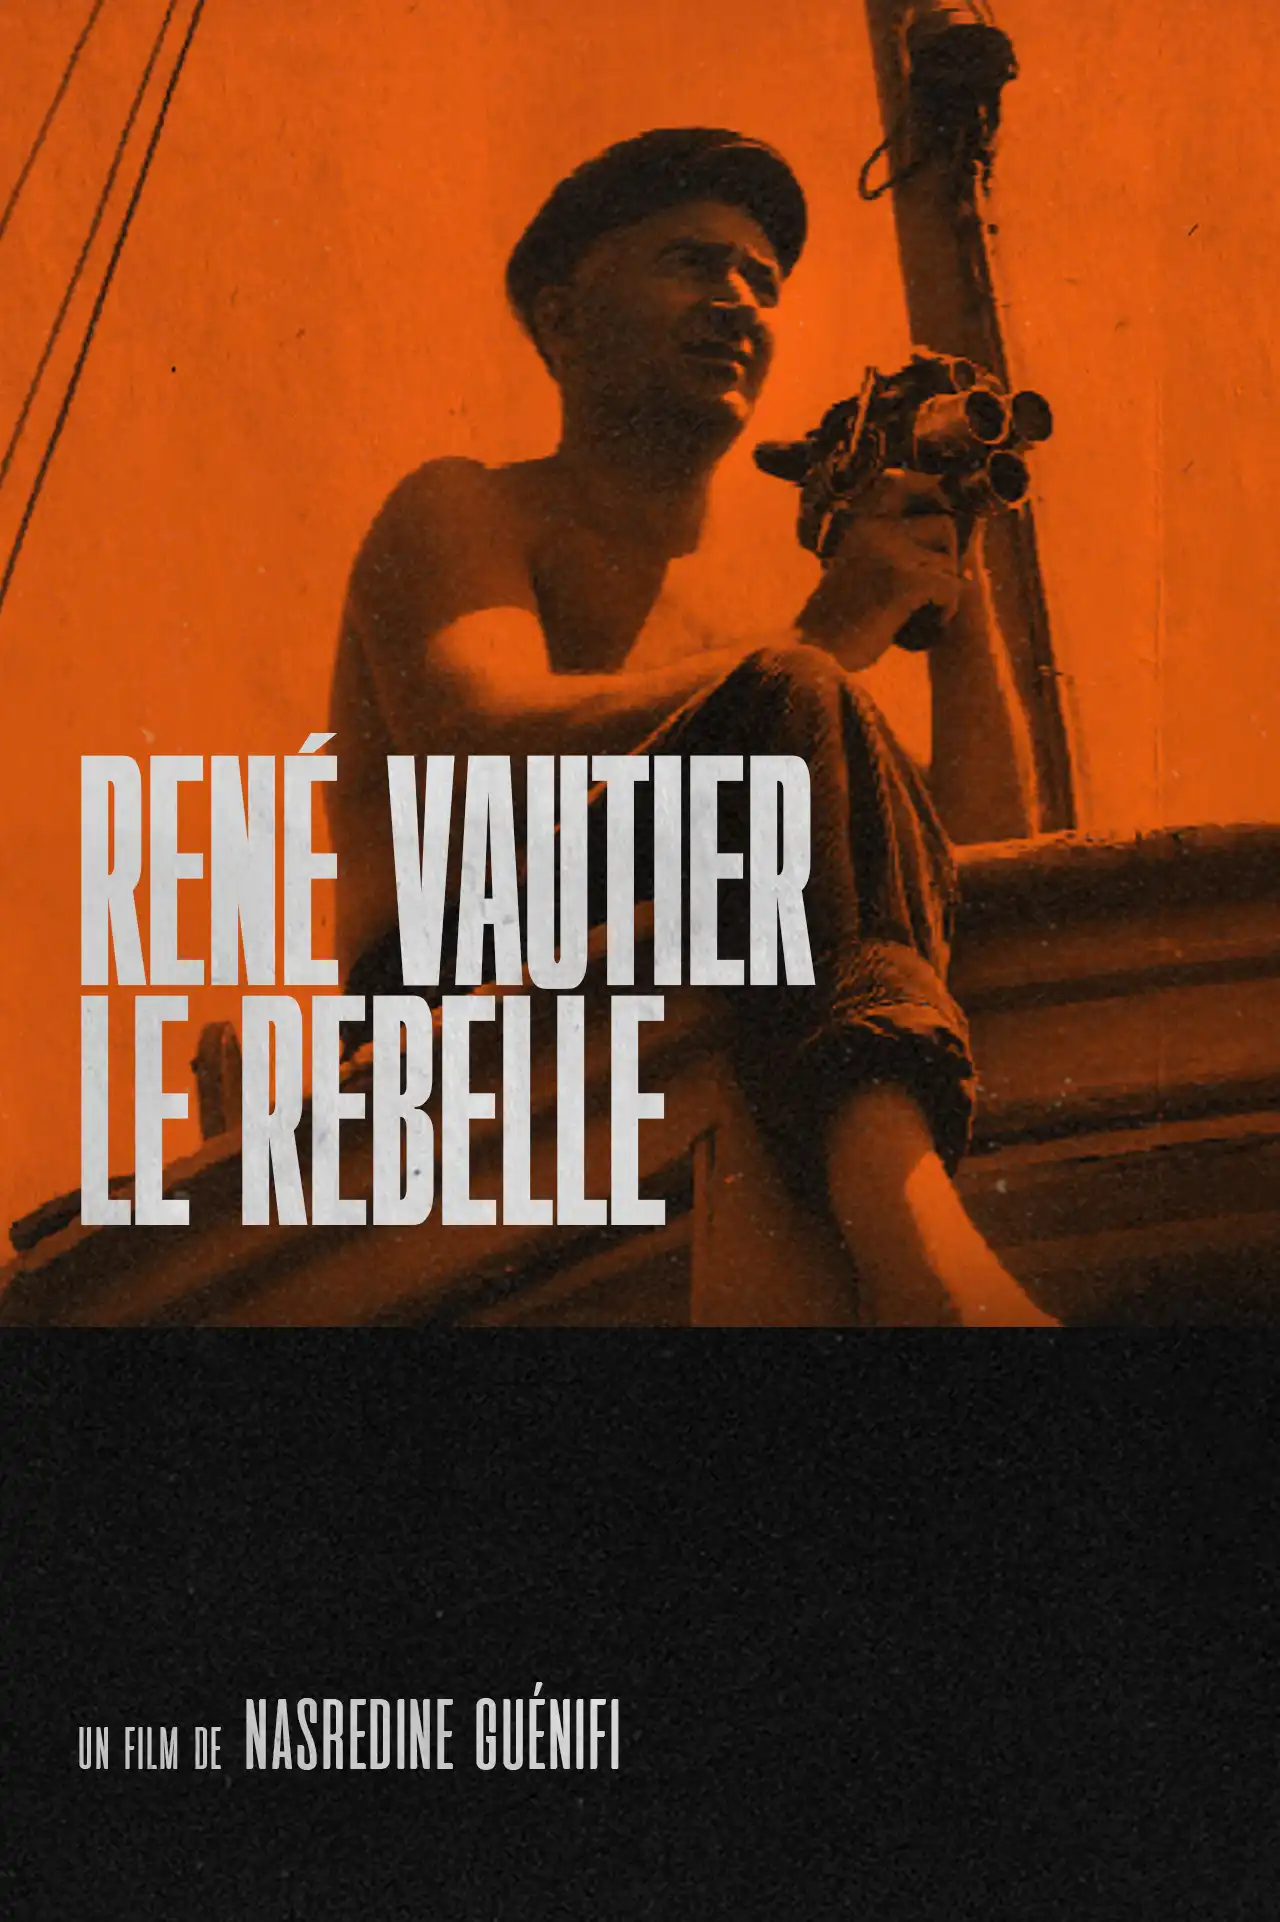 Watch and Download René Vautier, le rebelle 3